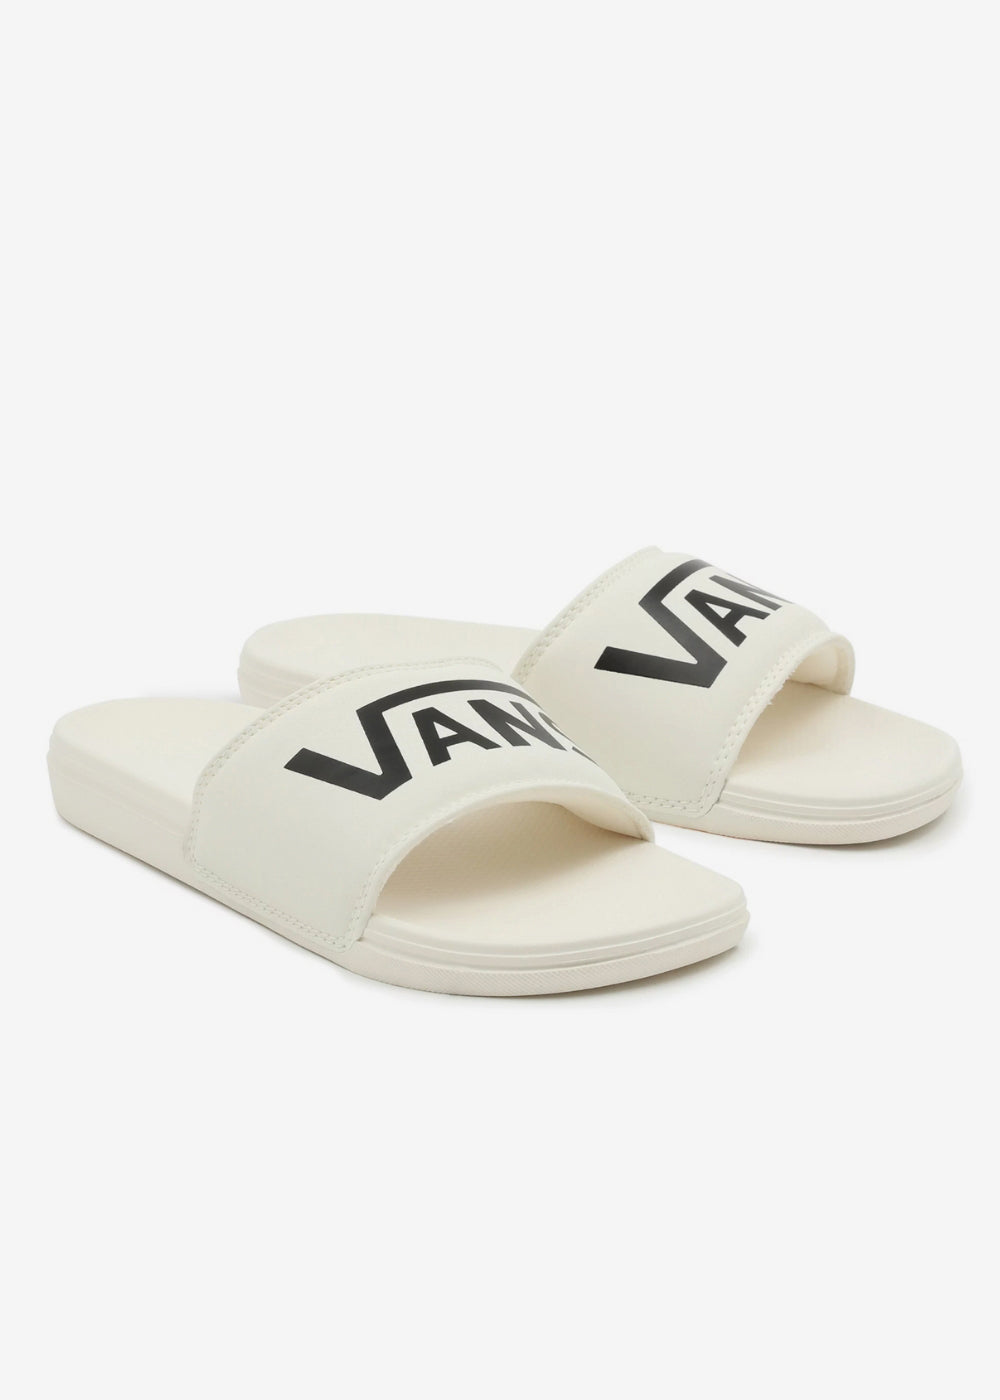 La Costa Slide Sandals in Marshmallow by Vans